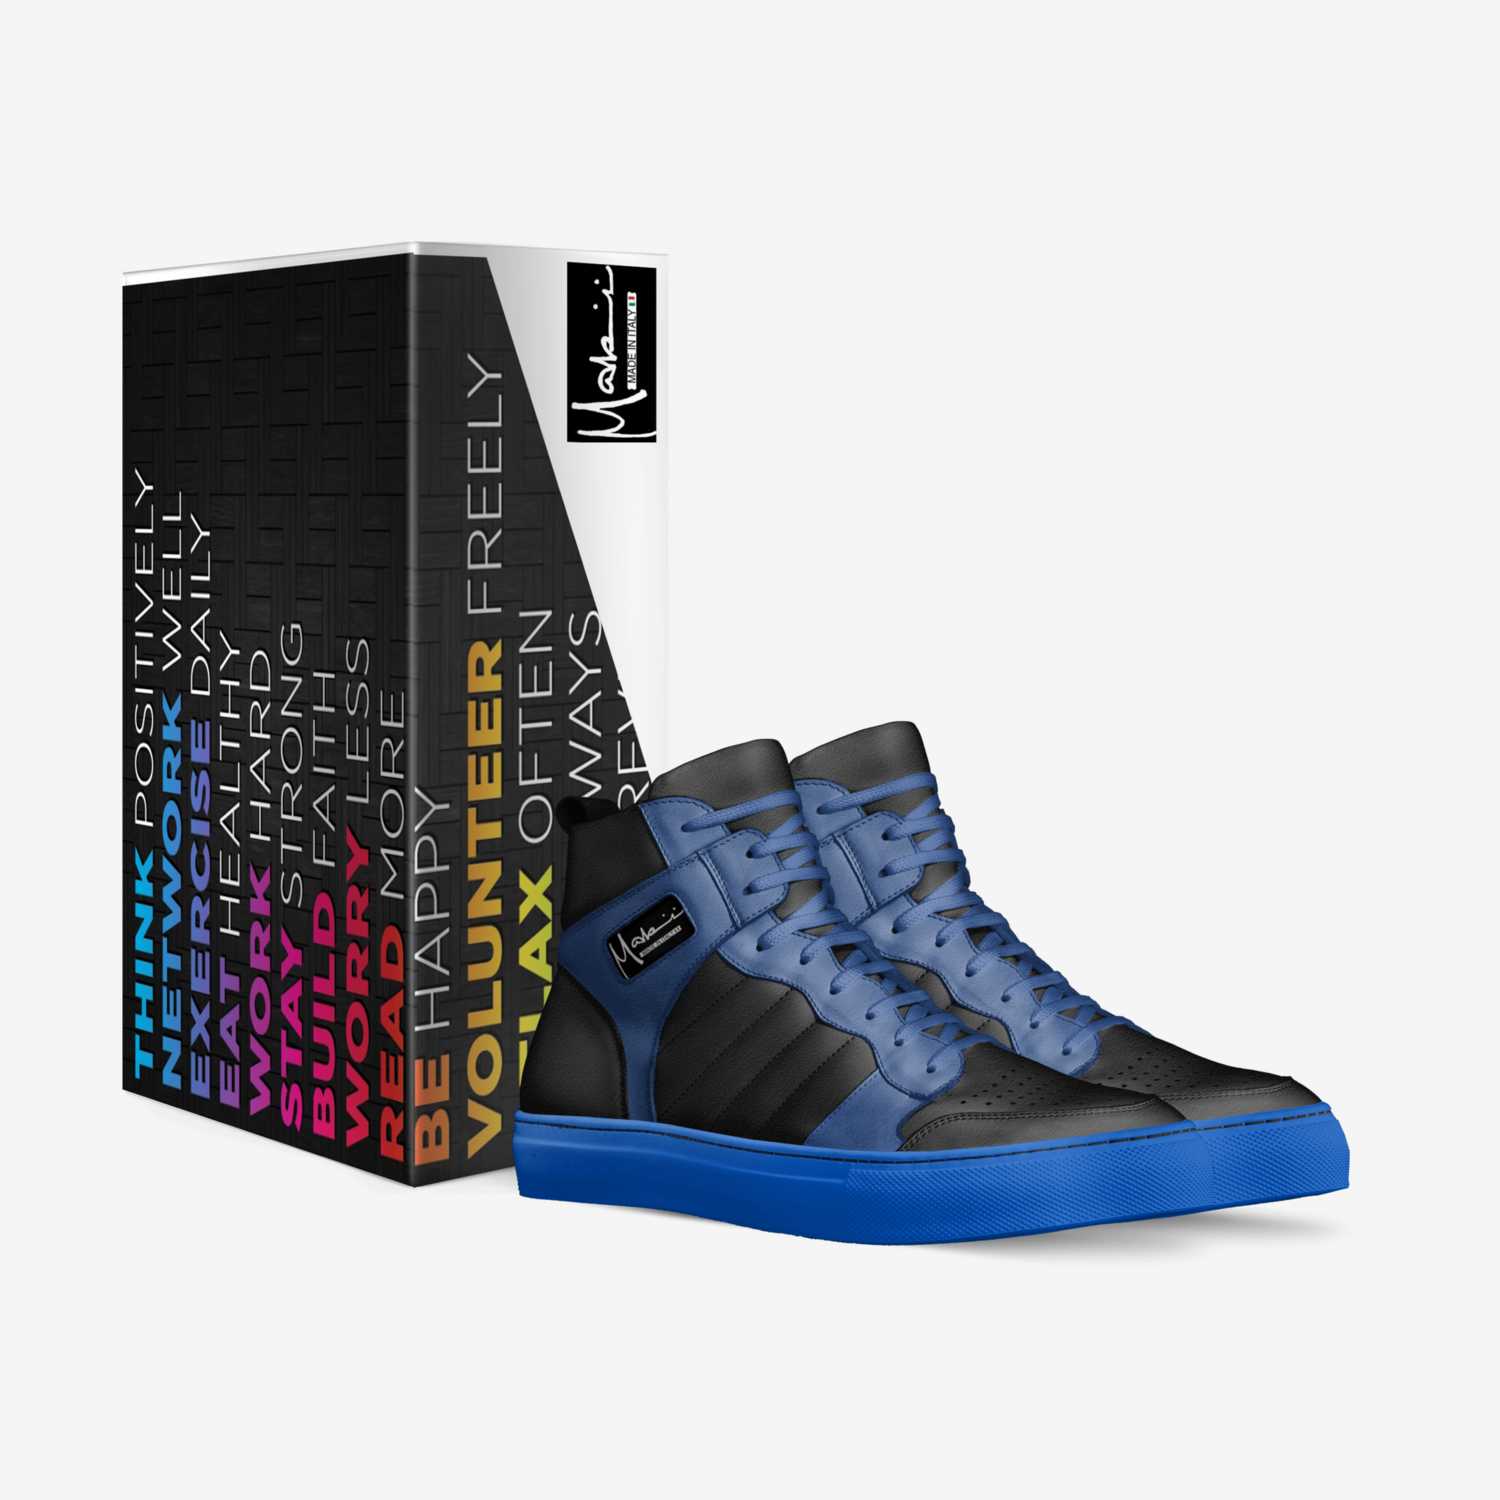 MOAD Original custom made in Italy shoes by Makiri Duckett | Box view